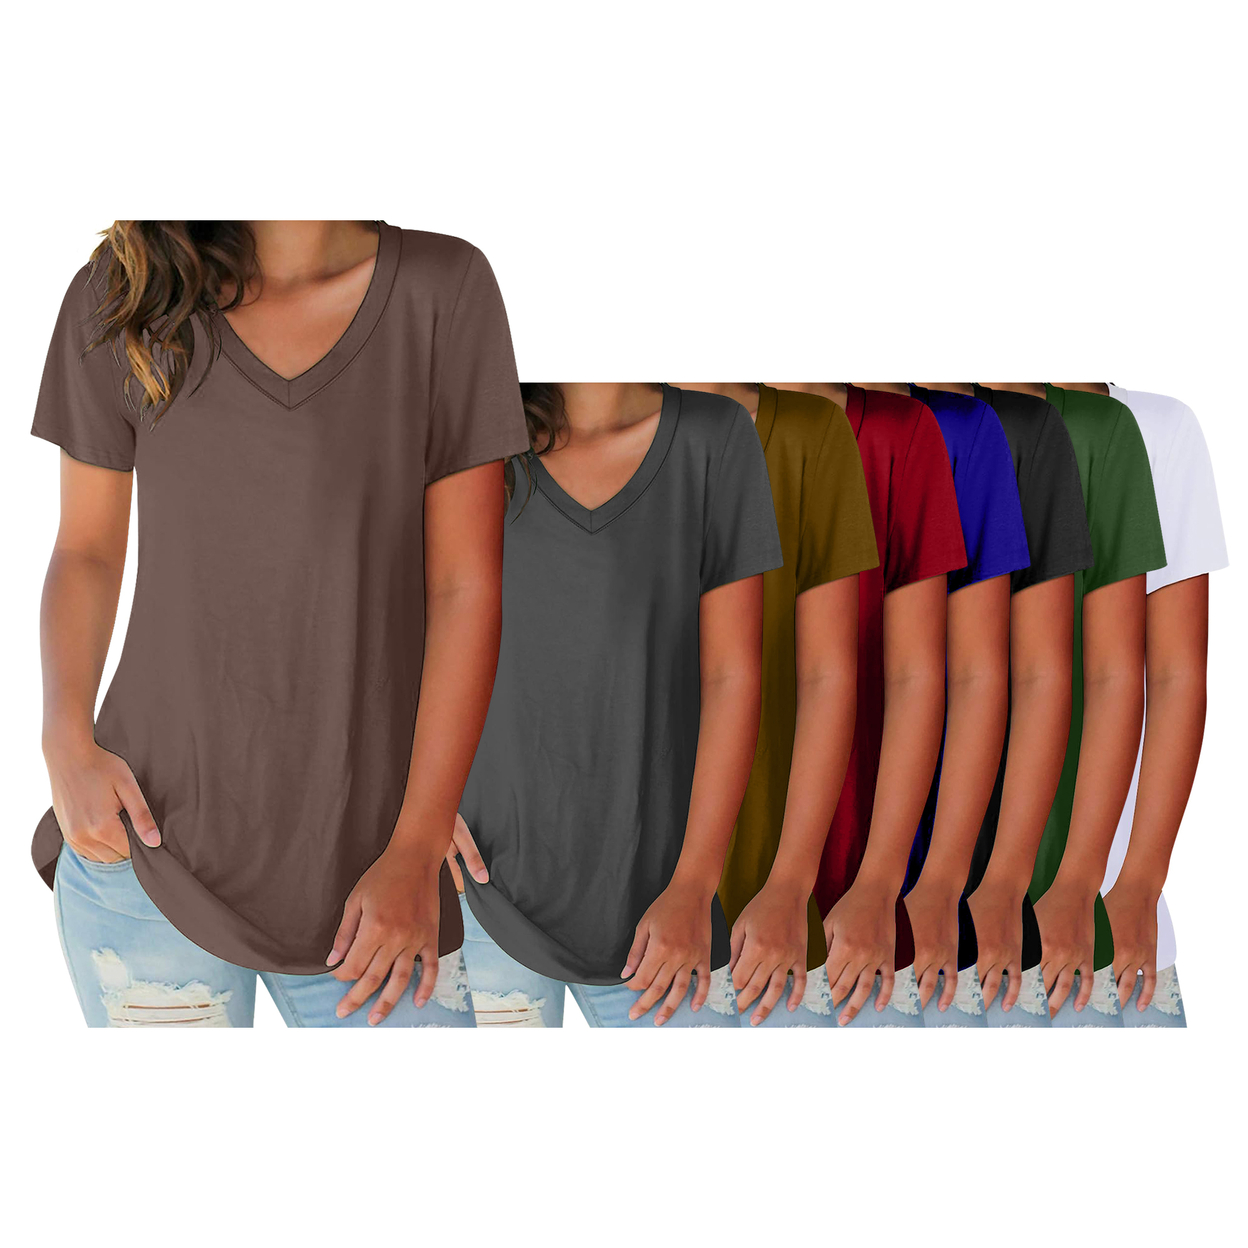 3-Pack: Women's Ultra Soft Smooth Cotton Blend Basic V-Neck Short Sleeve Shirts - Black, White, Green, Medium